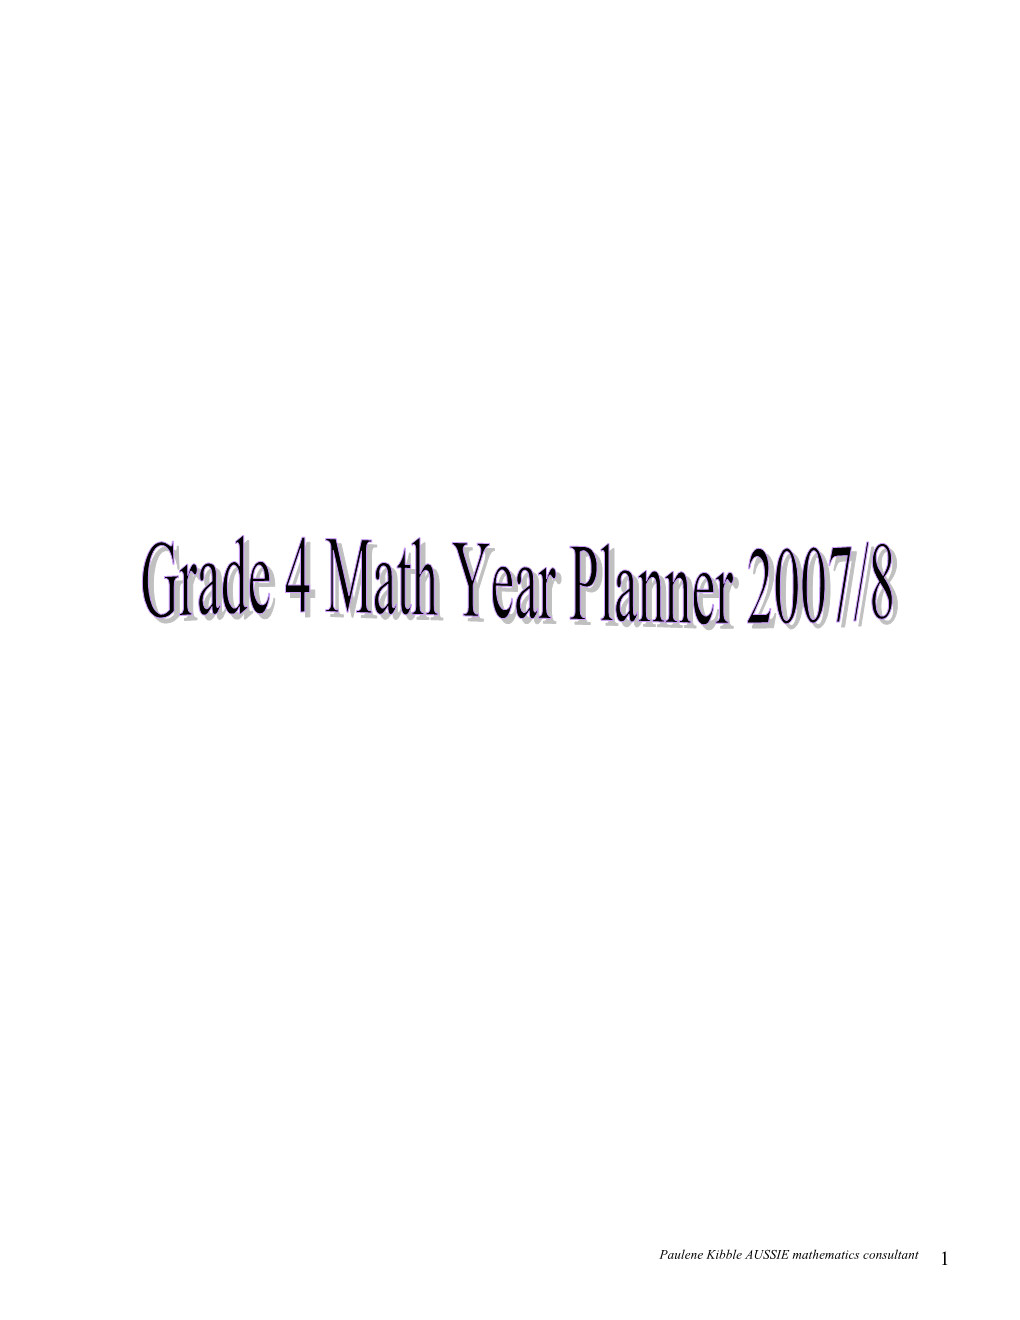 Grade 4 Math Planner 2007/8- September